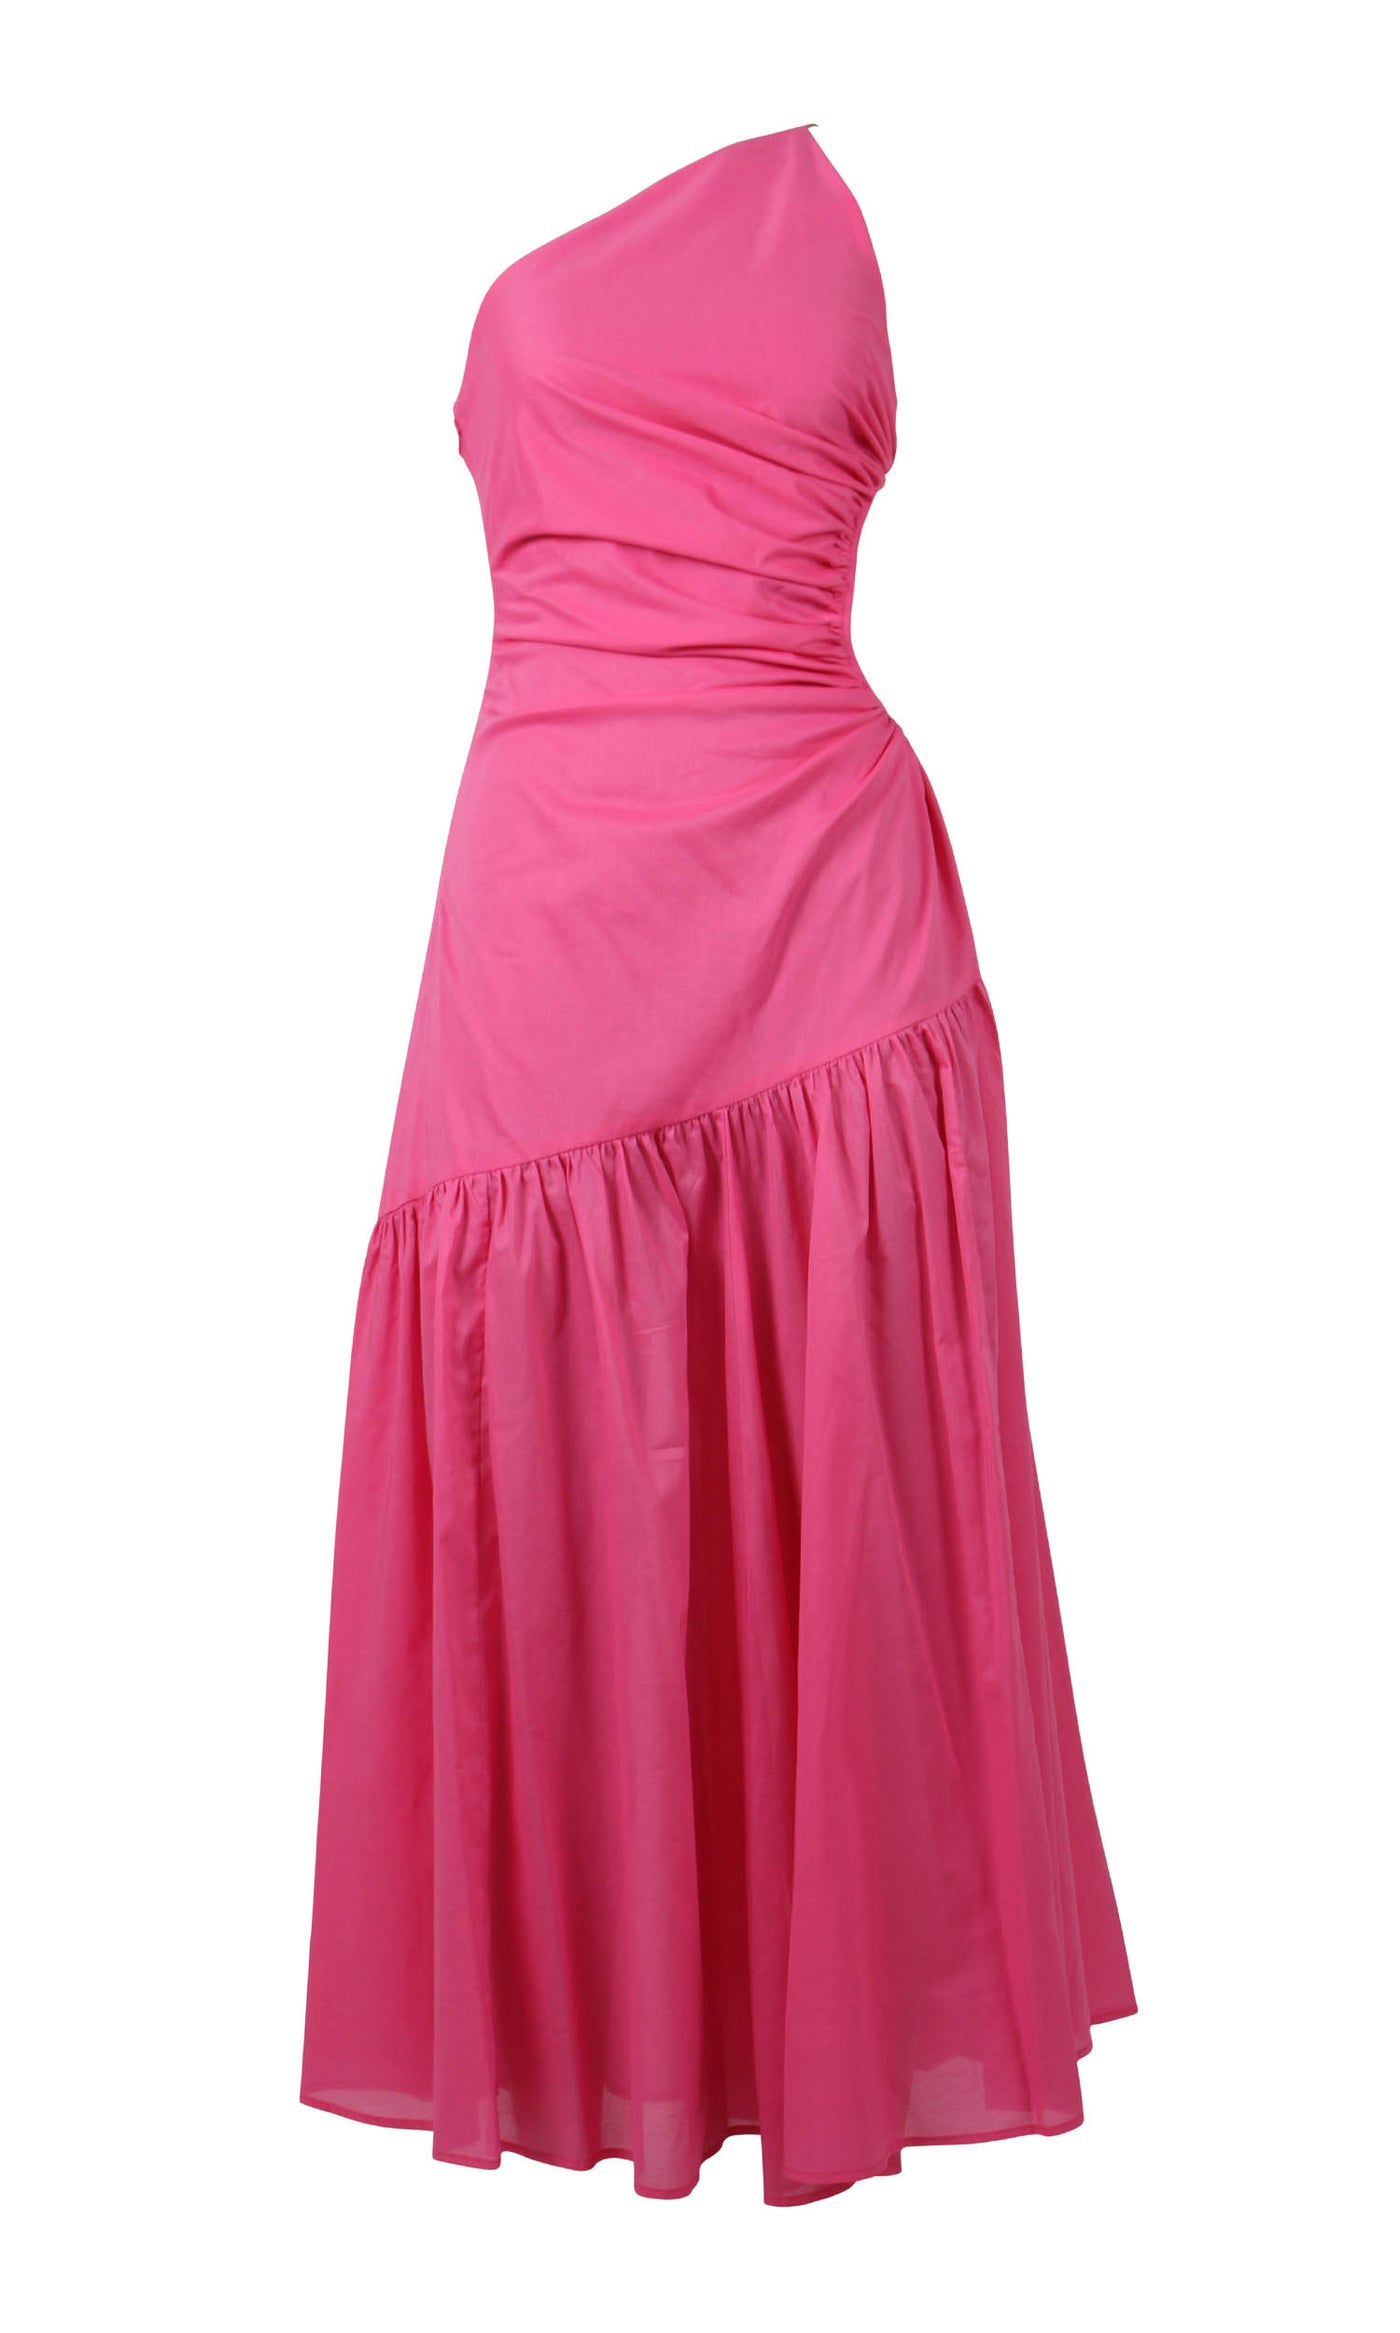 Bettina Dress (Candy Pink)